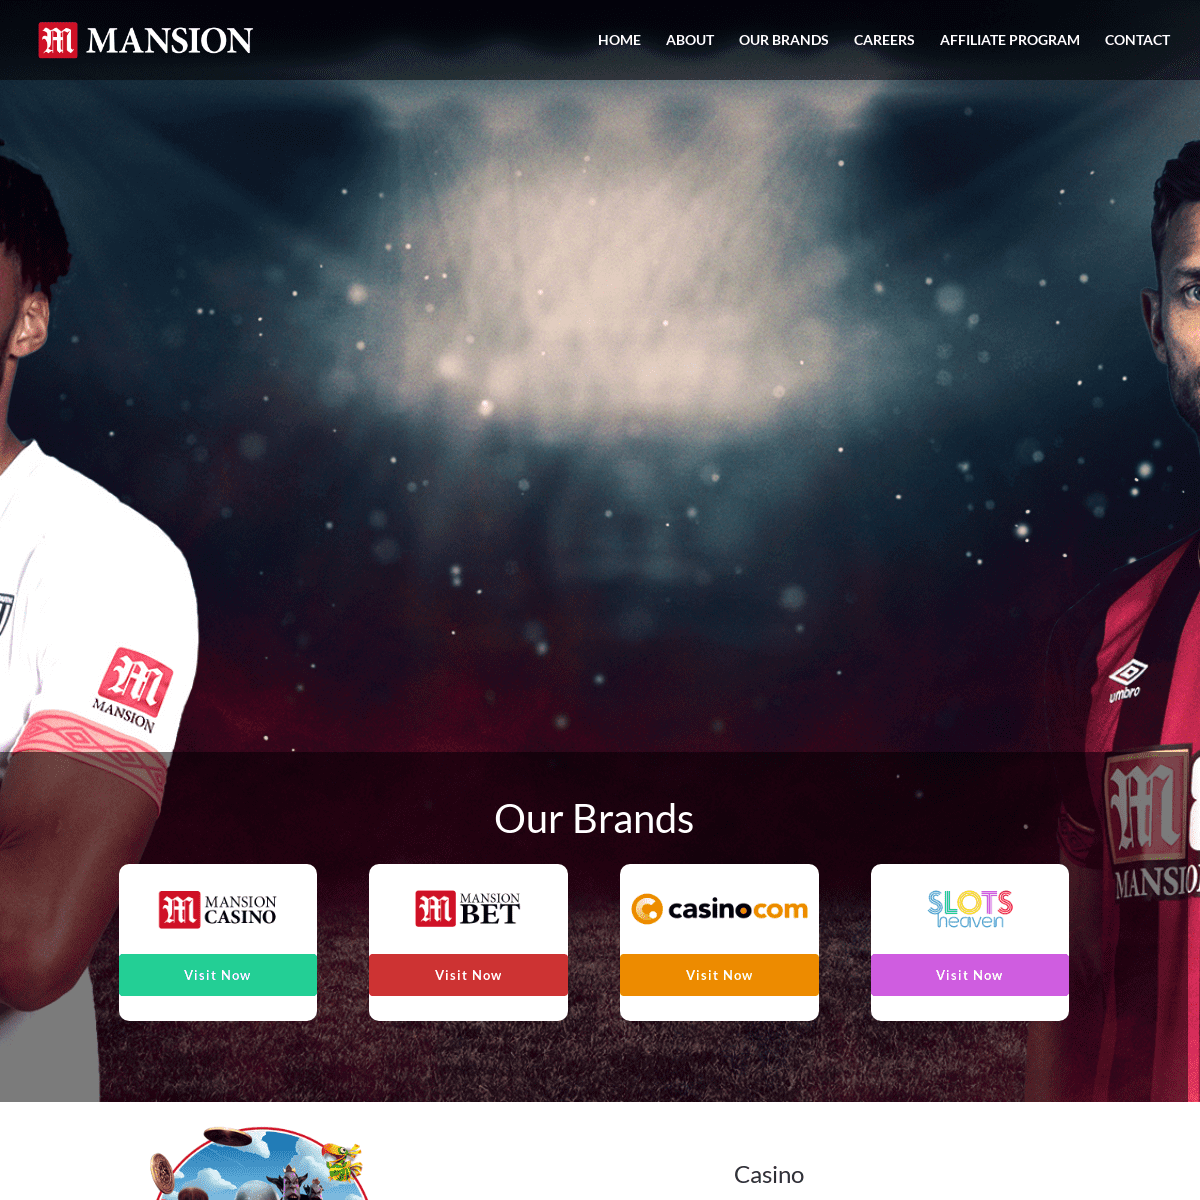 Mansion | Mansion - Online Casino & Sports Betting